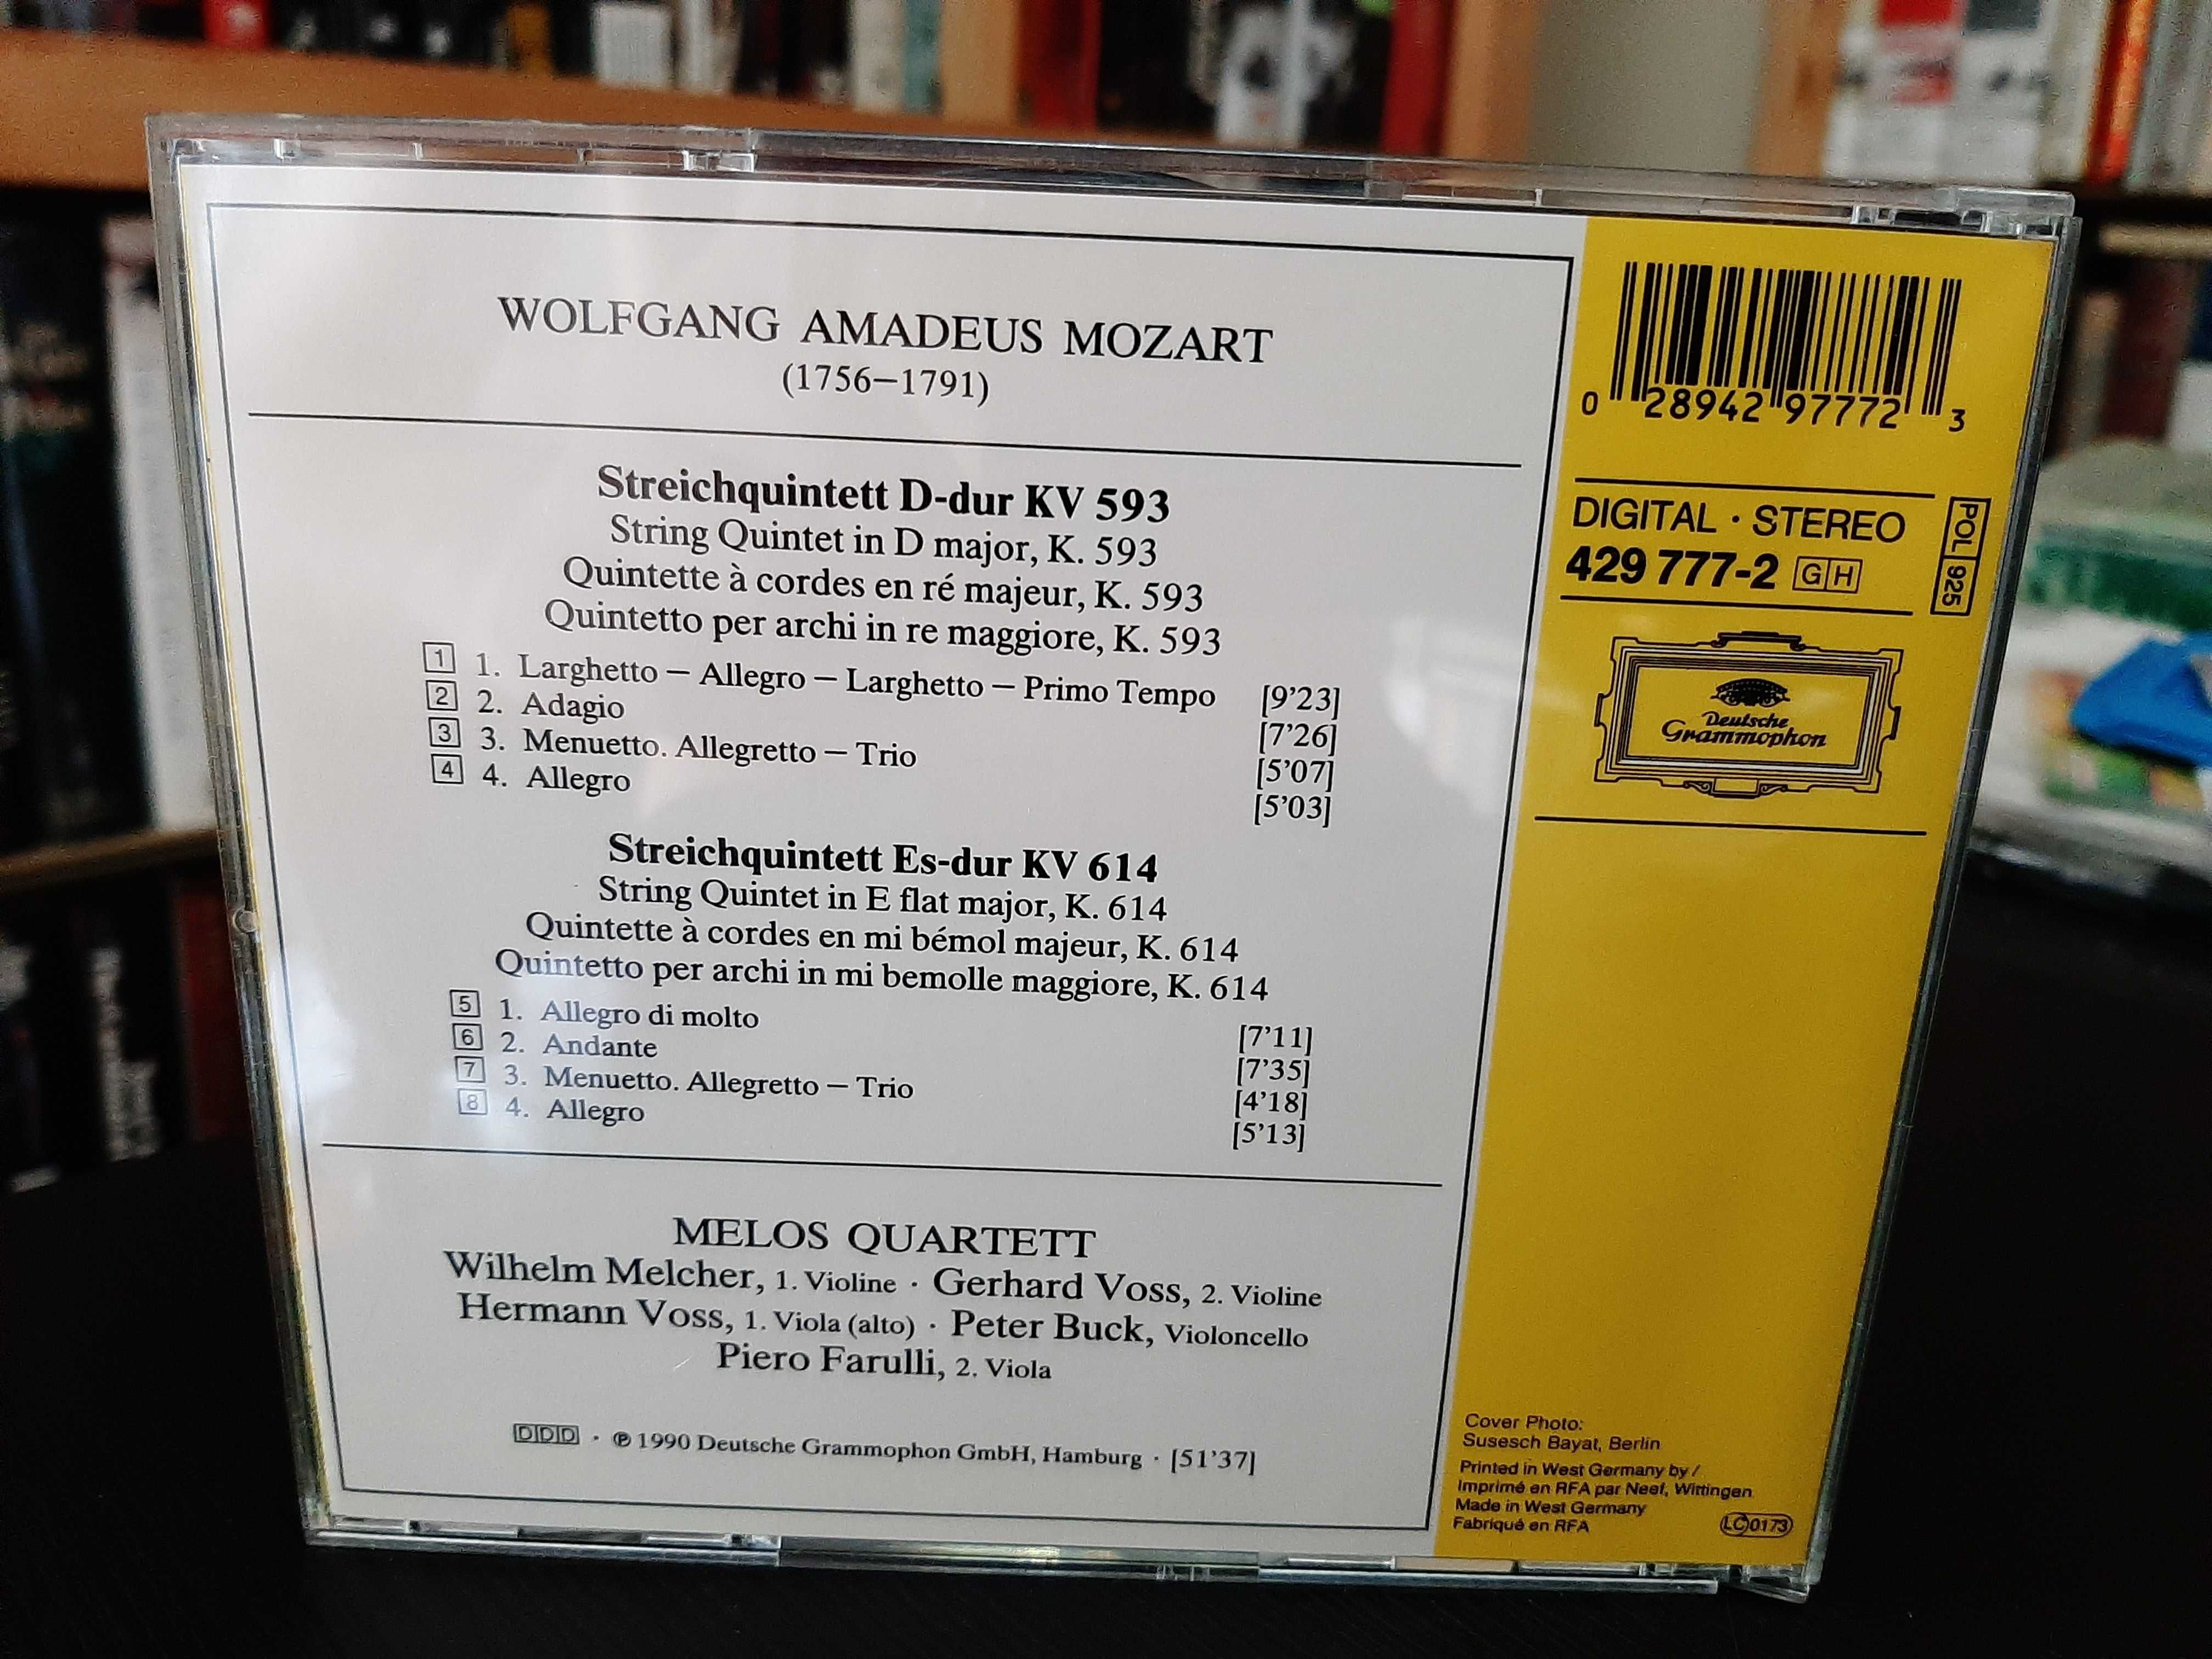 Mozart – String quintets KV 593 & 614 - Melos Quartett, Piero Farulli